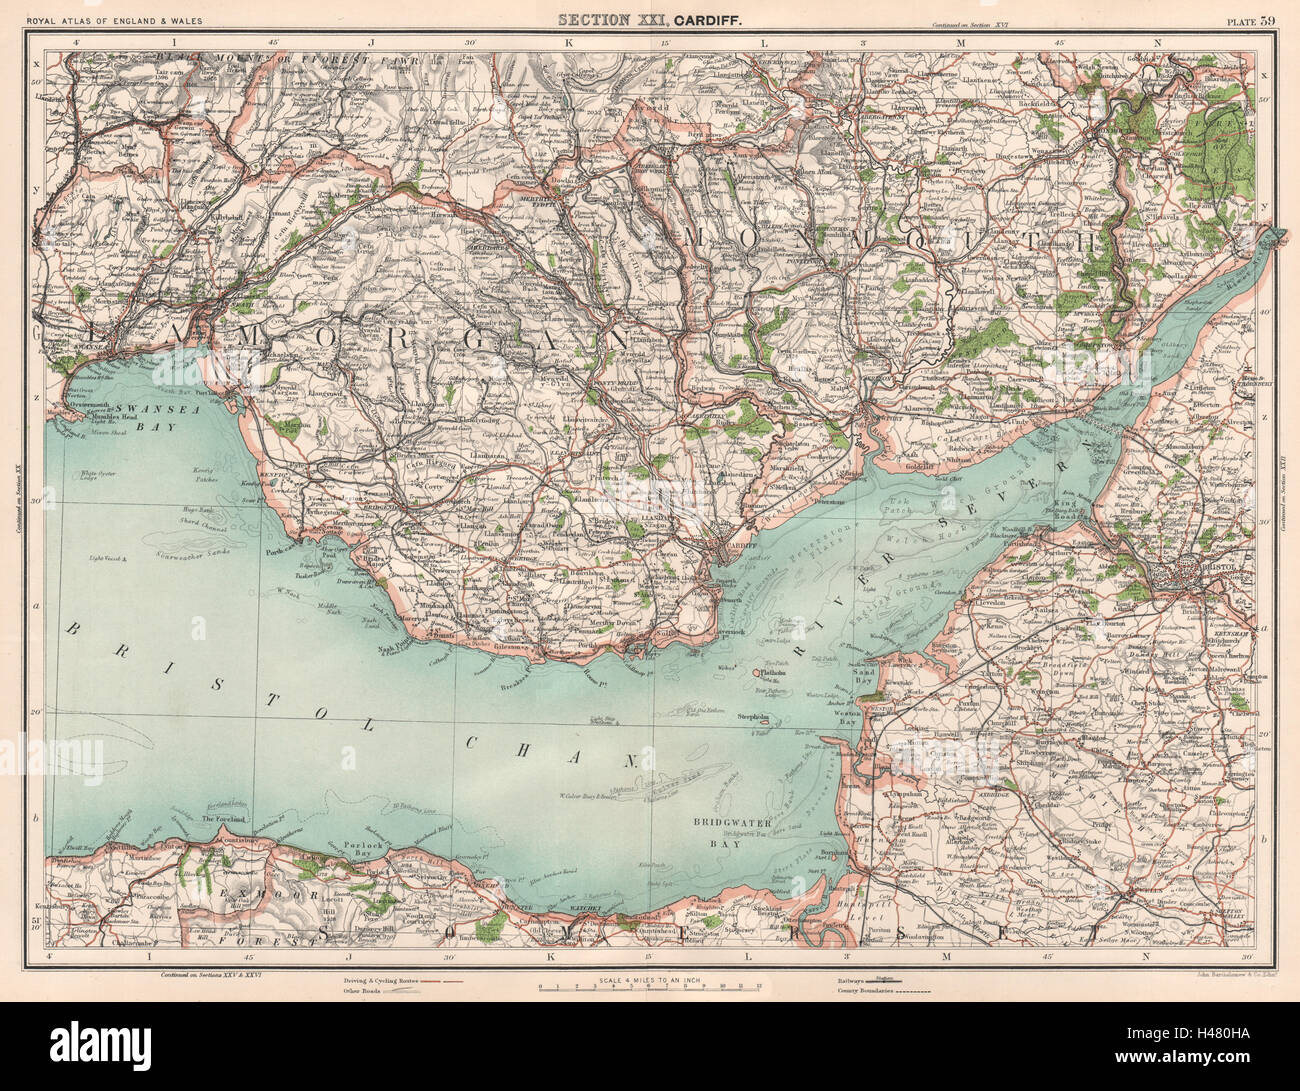 South Wales valleys BRISTOL CHANNEL Somerset coast 1898 map SEVERN ESTUARY 